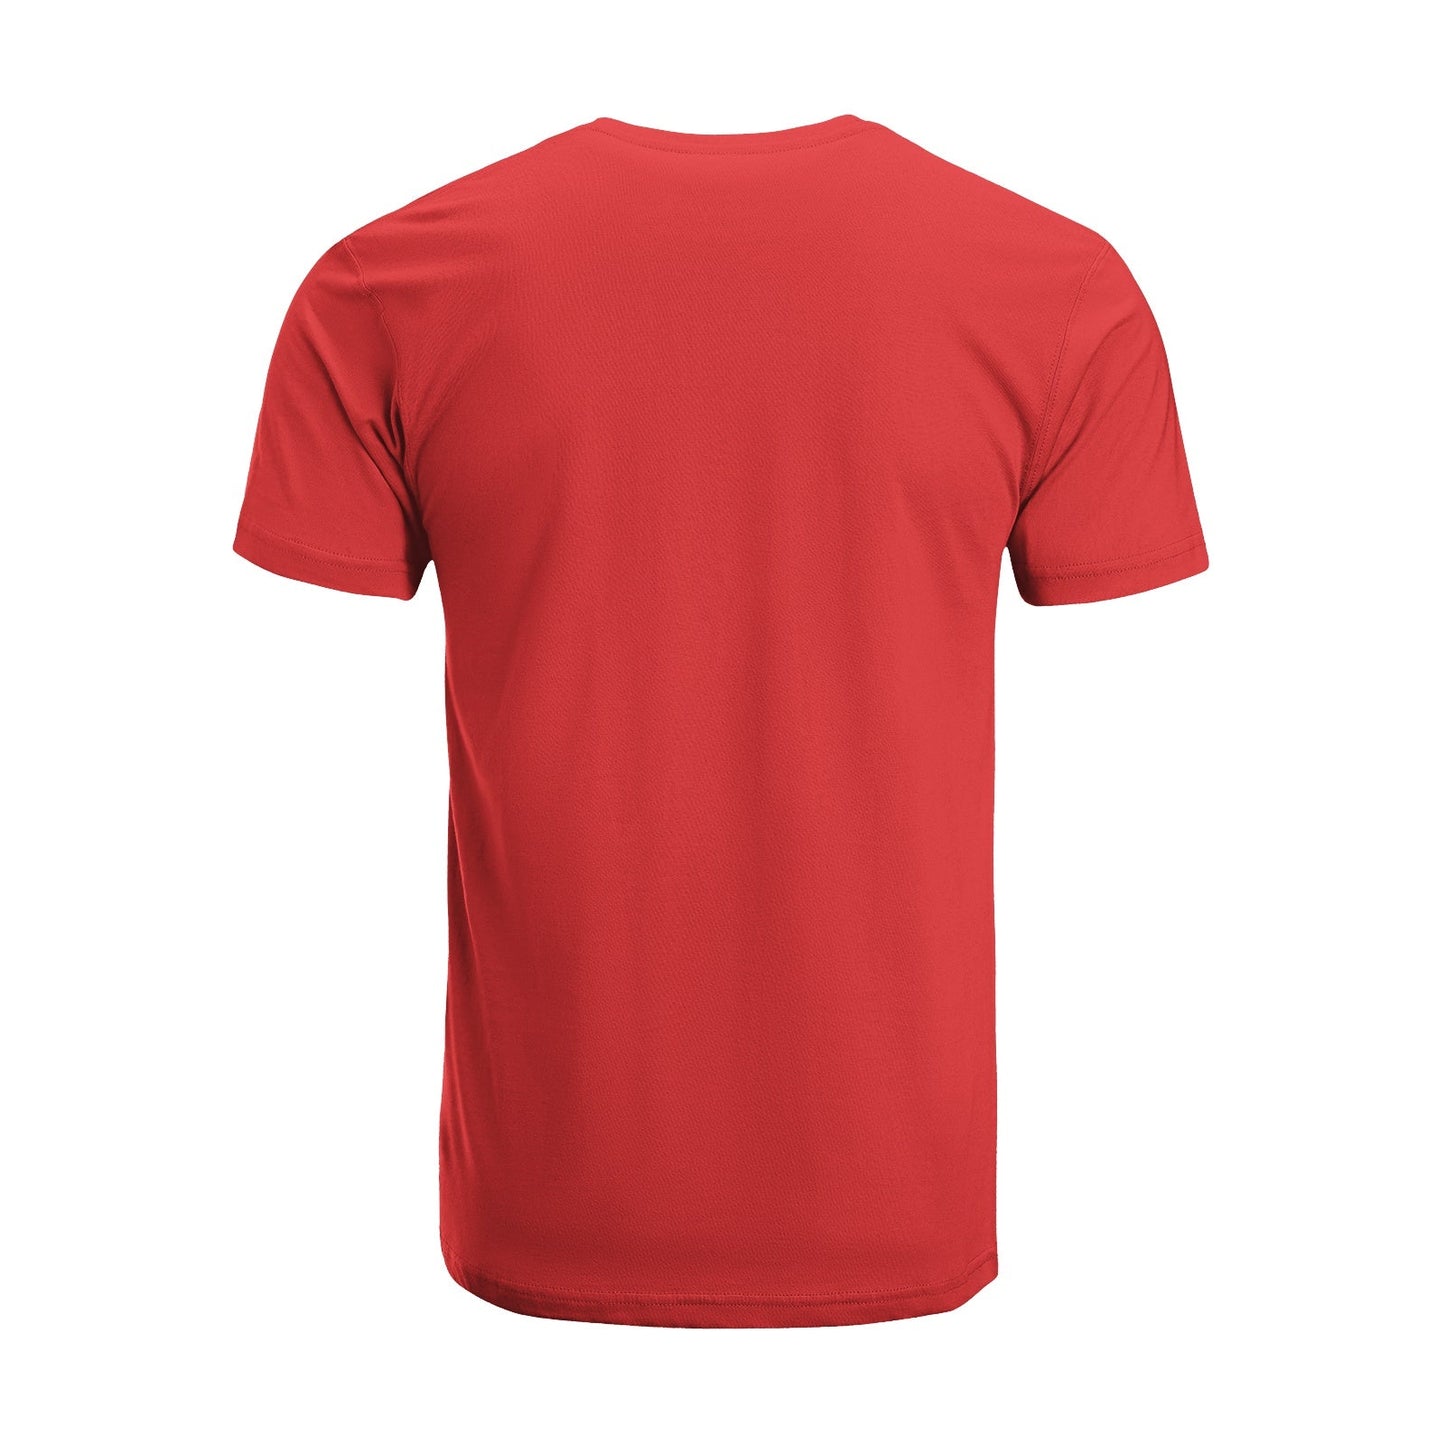 Unisex Short Sleeve Crew Neck Cotton Jersey T-Shirt MOM 09